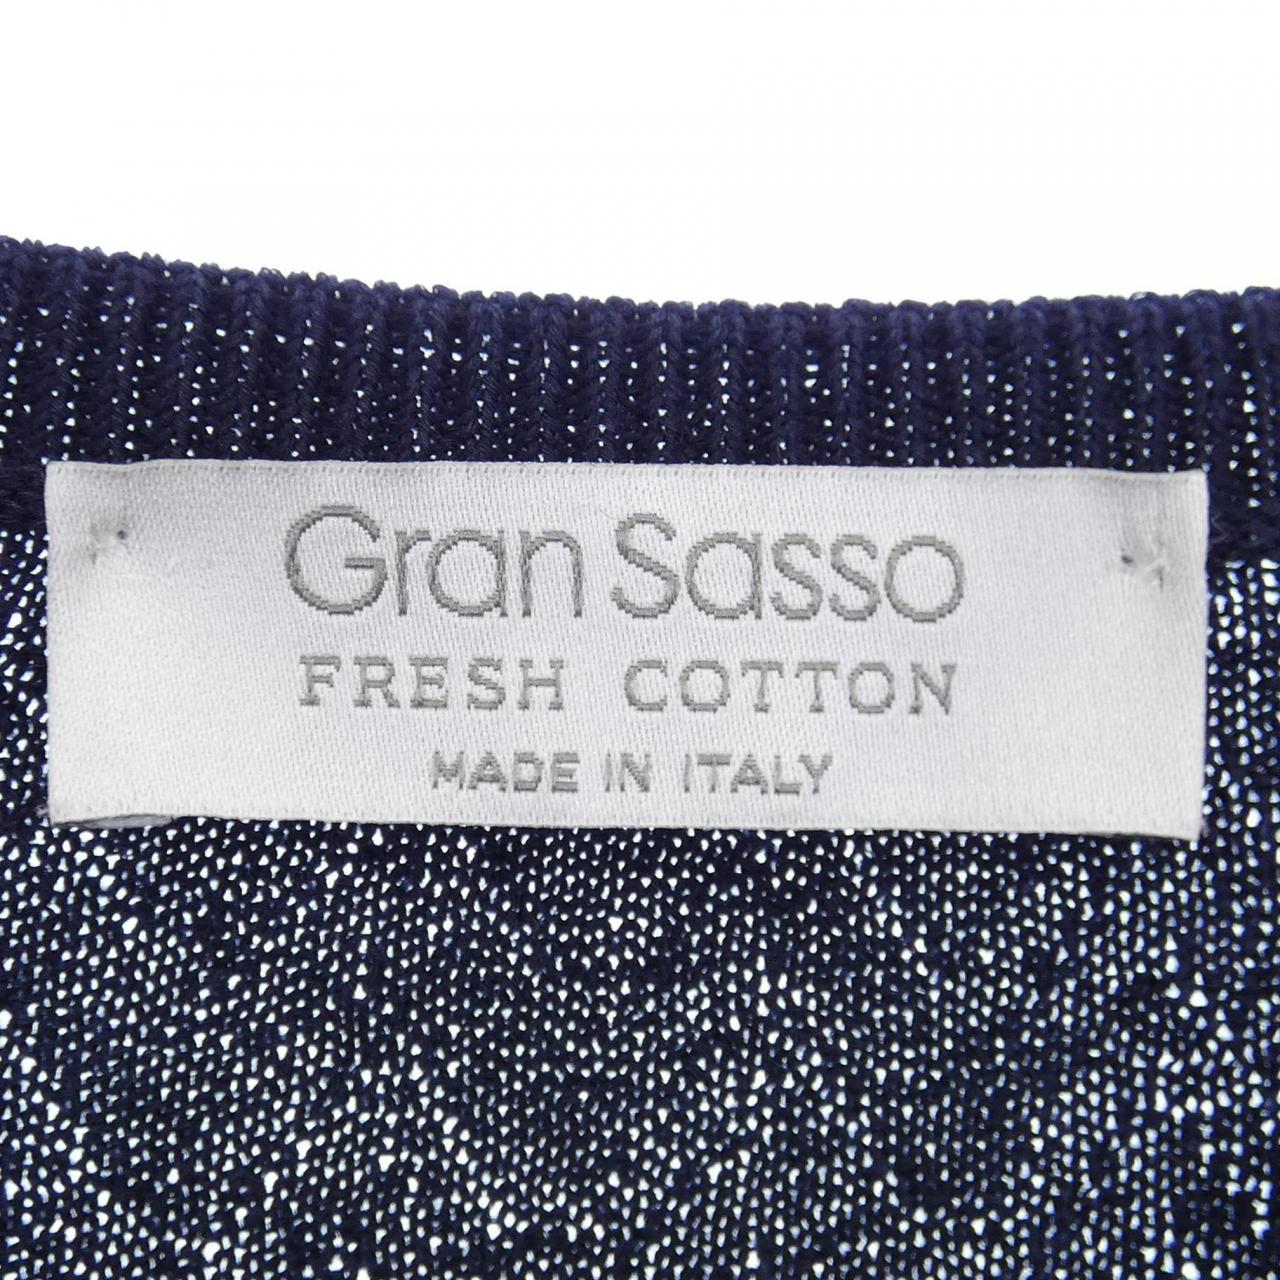 Gran Sasso Gran Sasso针织衫